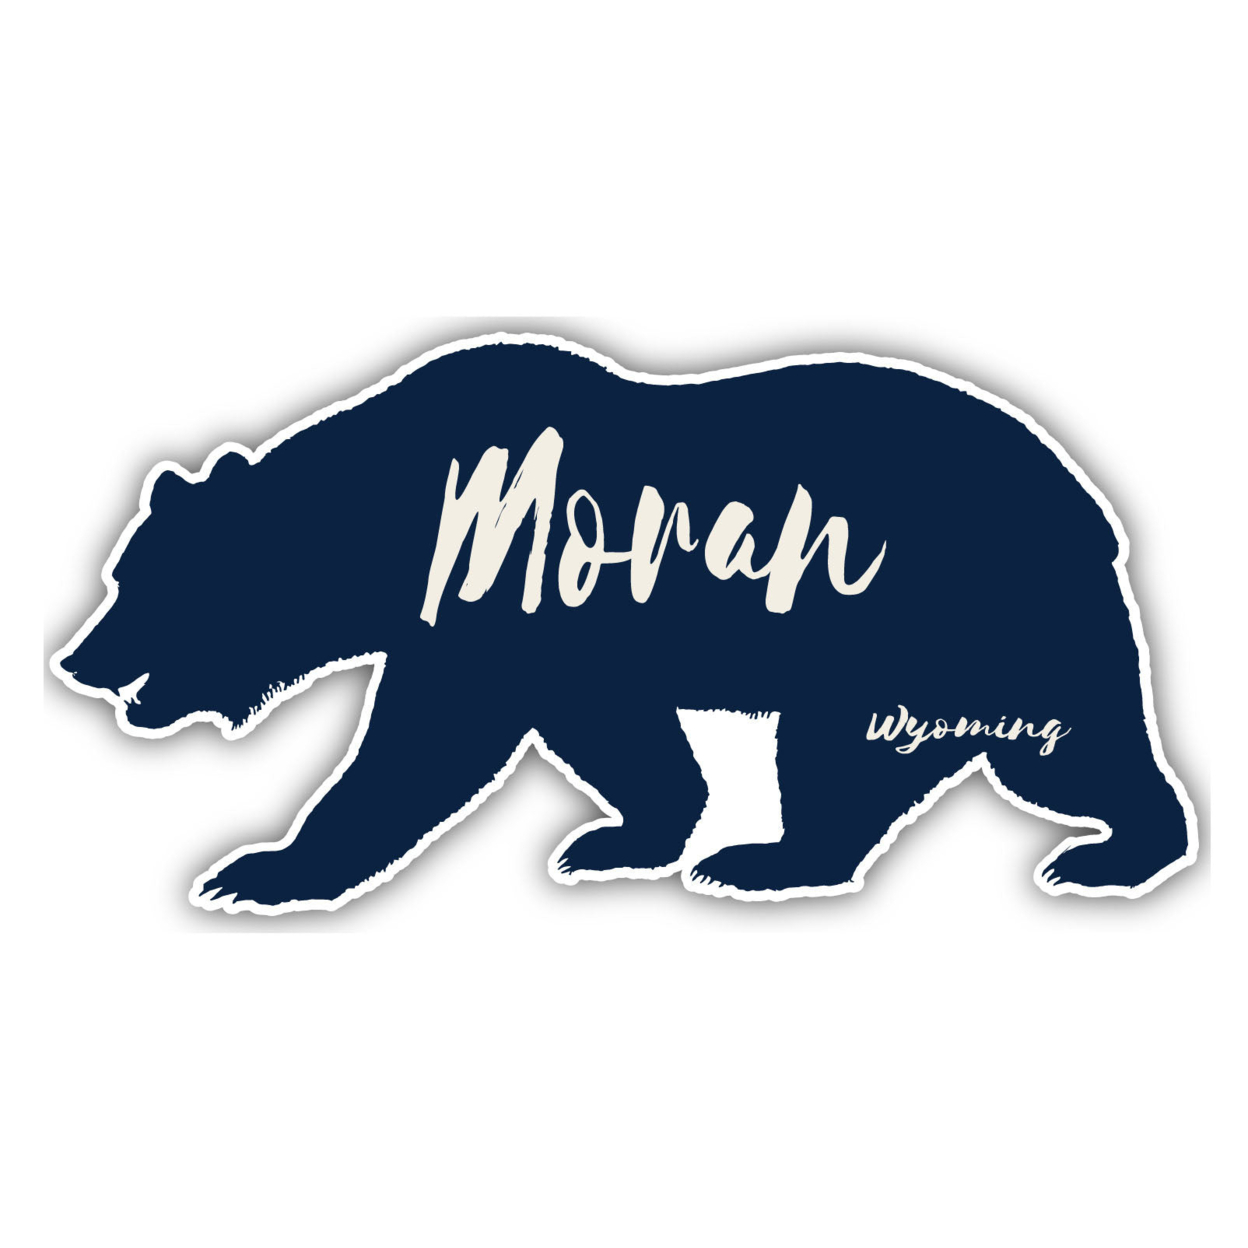 Moran Wyoming Souvenir Decorative Stickers (Choose Theme And Size) - Single Unit, 2-Inch, Tent